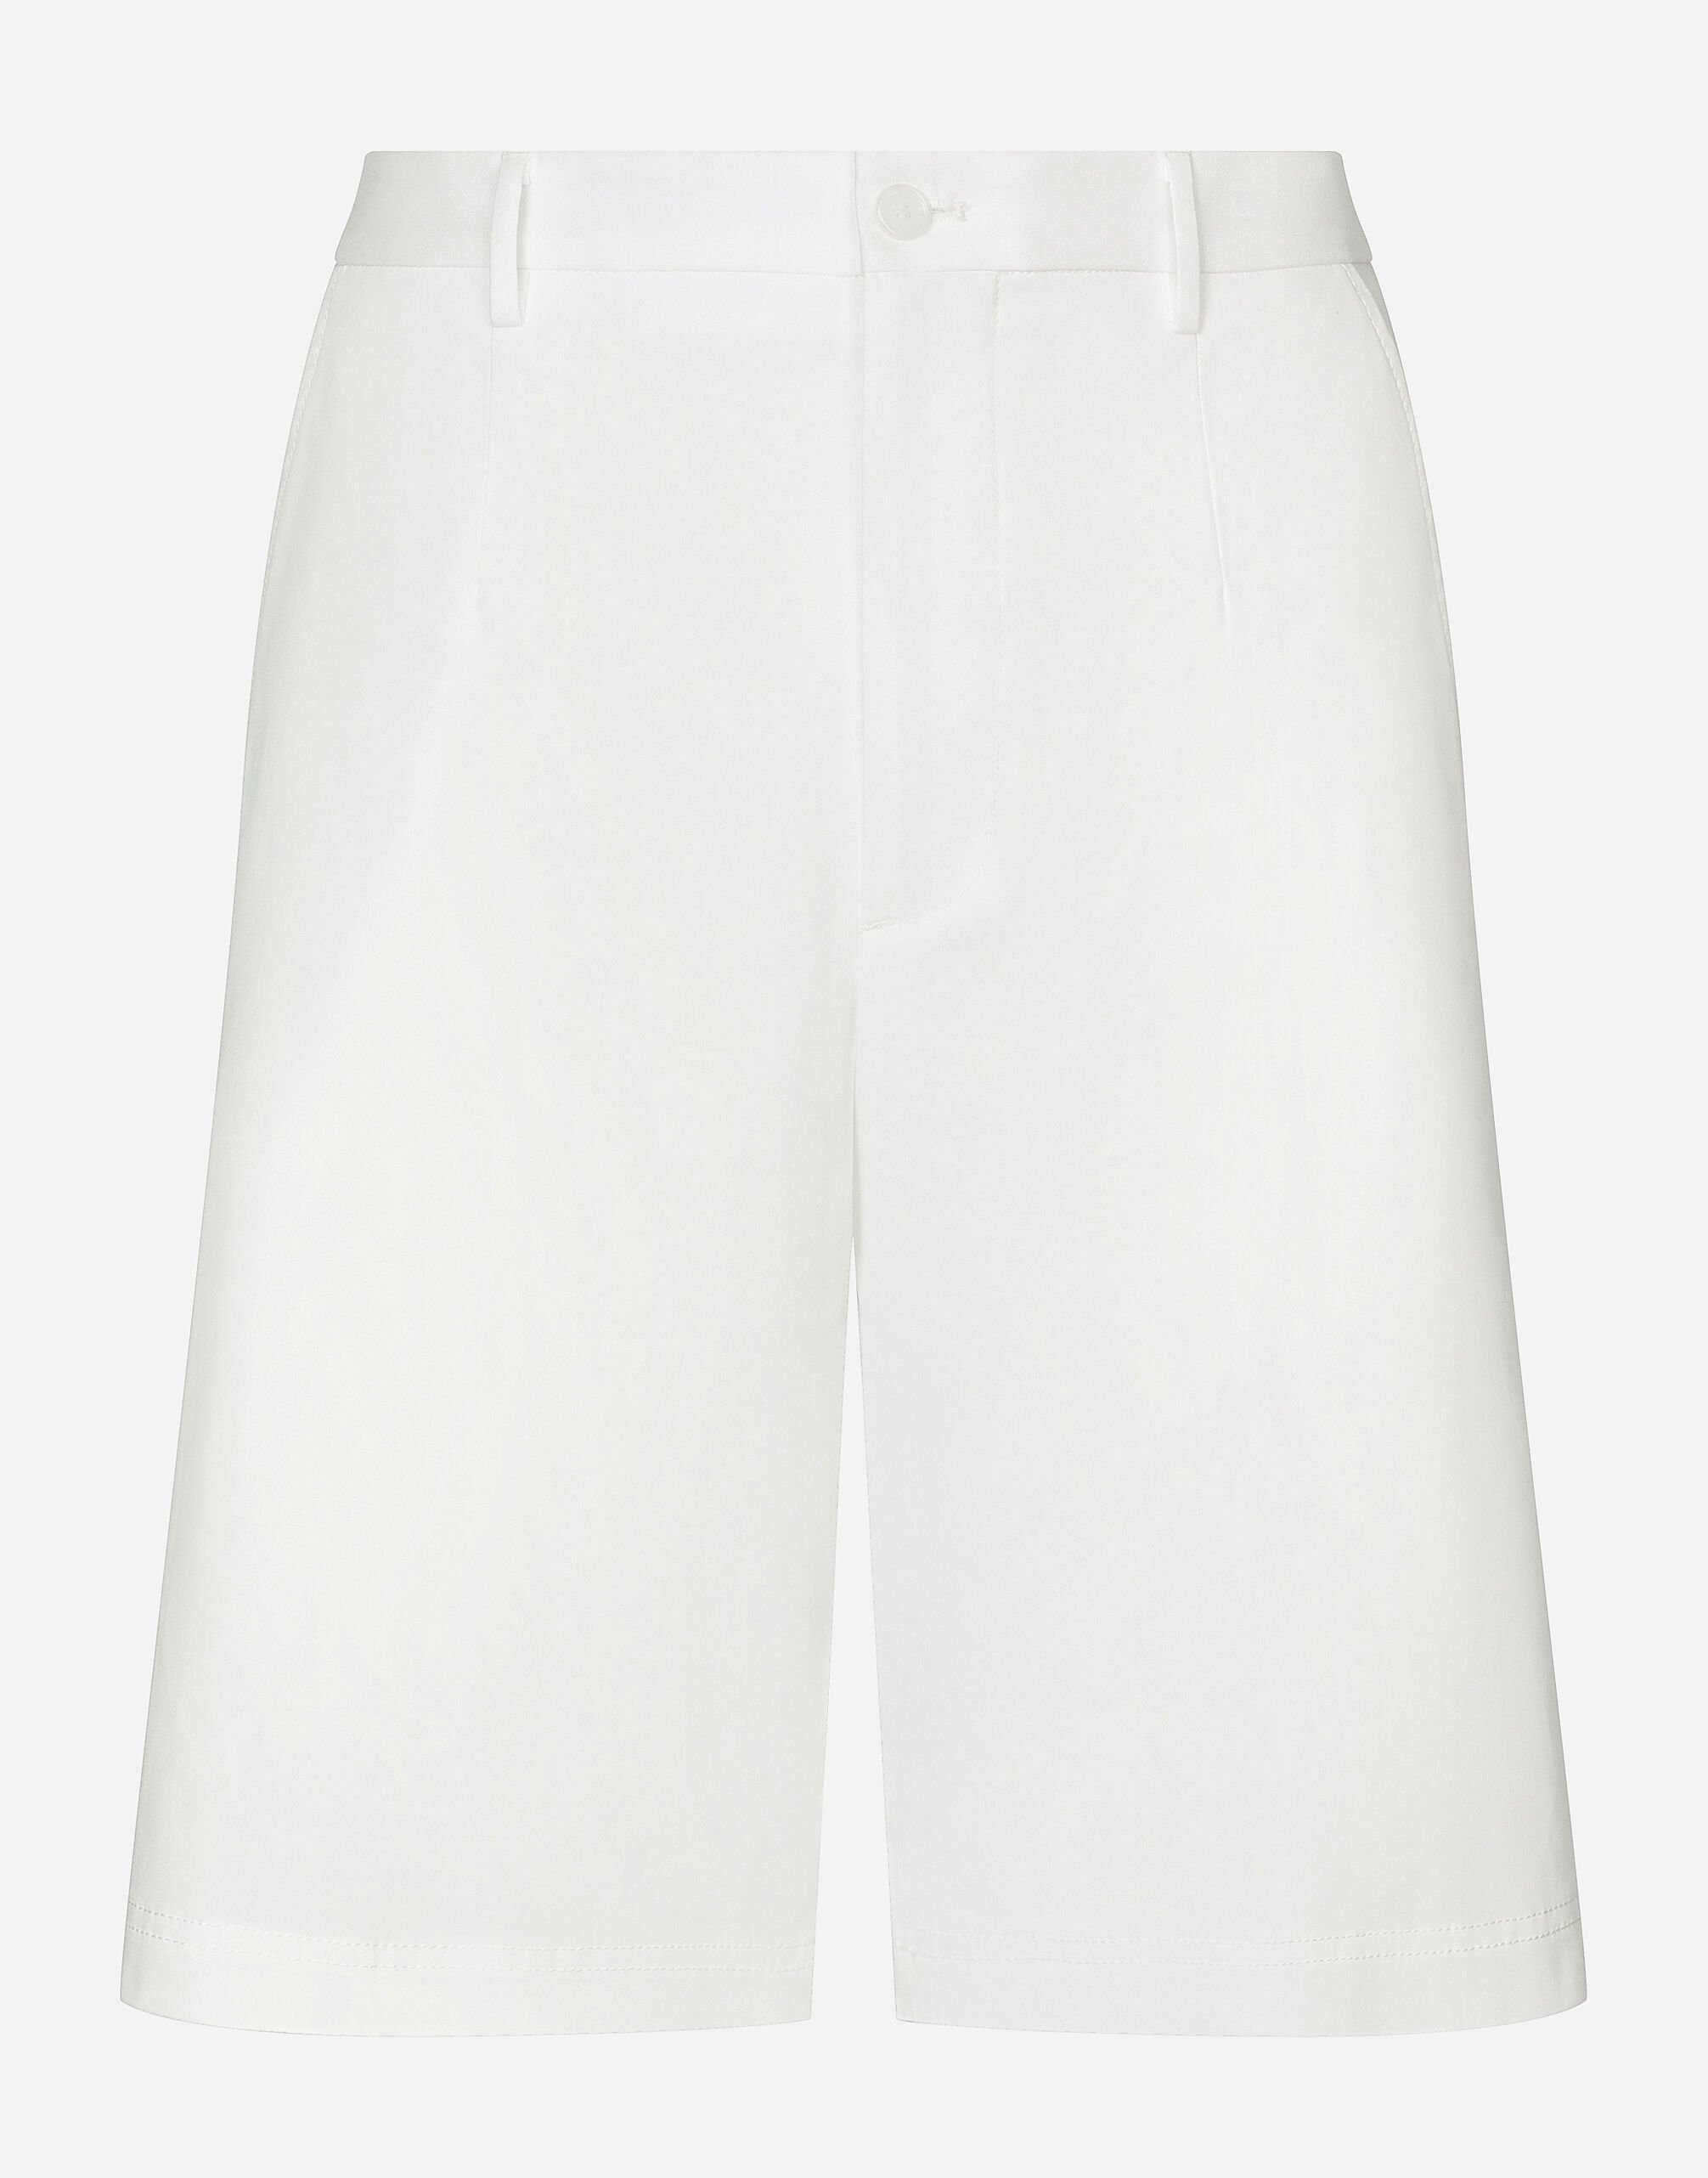 Dolce & Gabbana Stretch cotton shorts with branded tag Print G8RV9TII7CZ